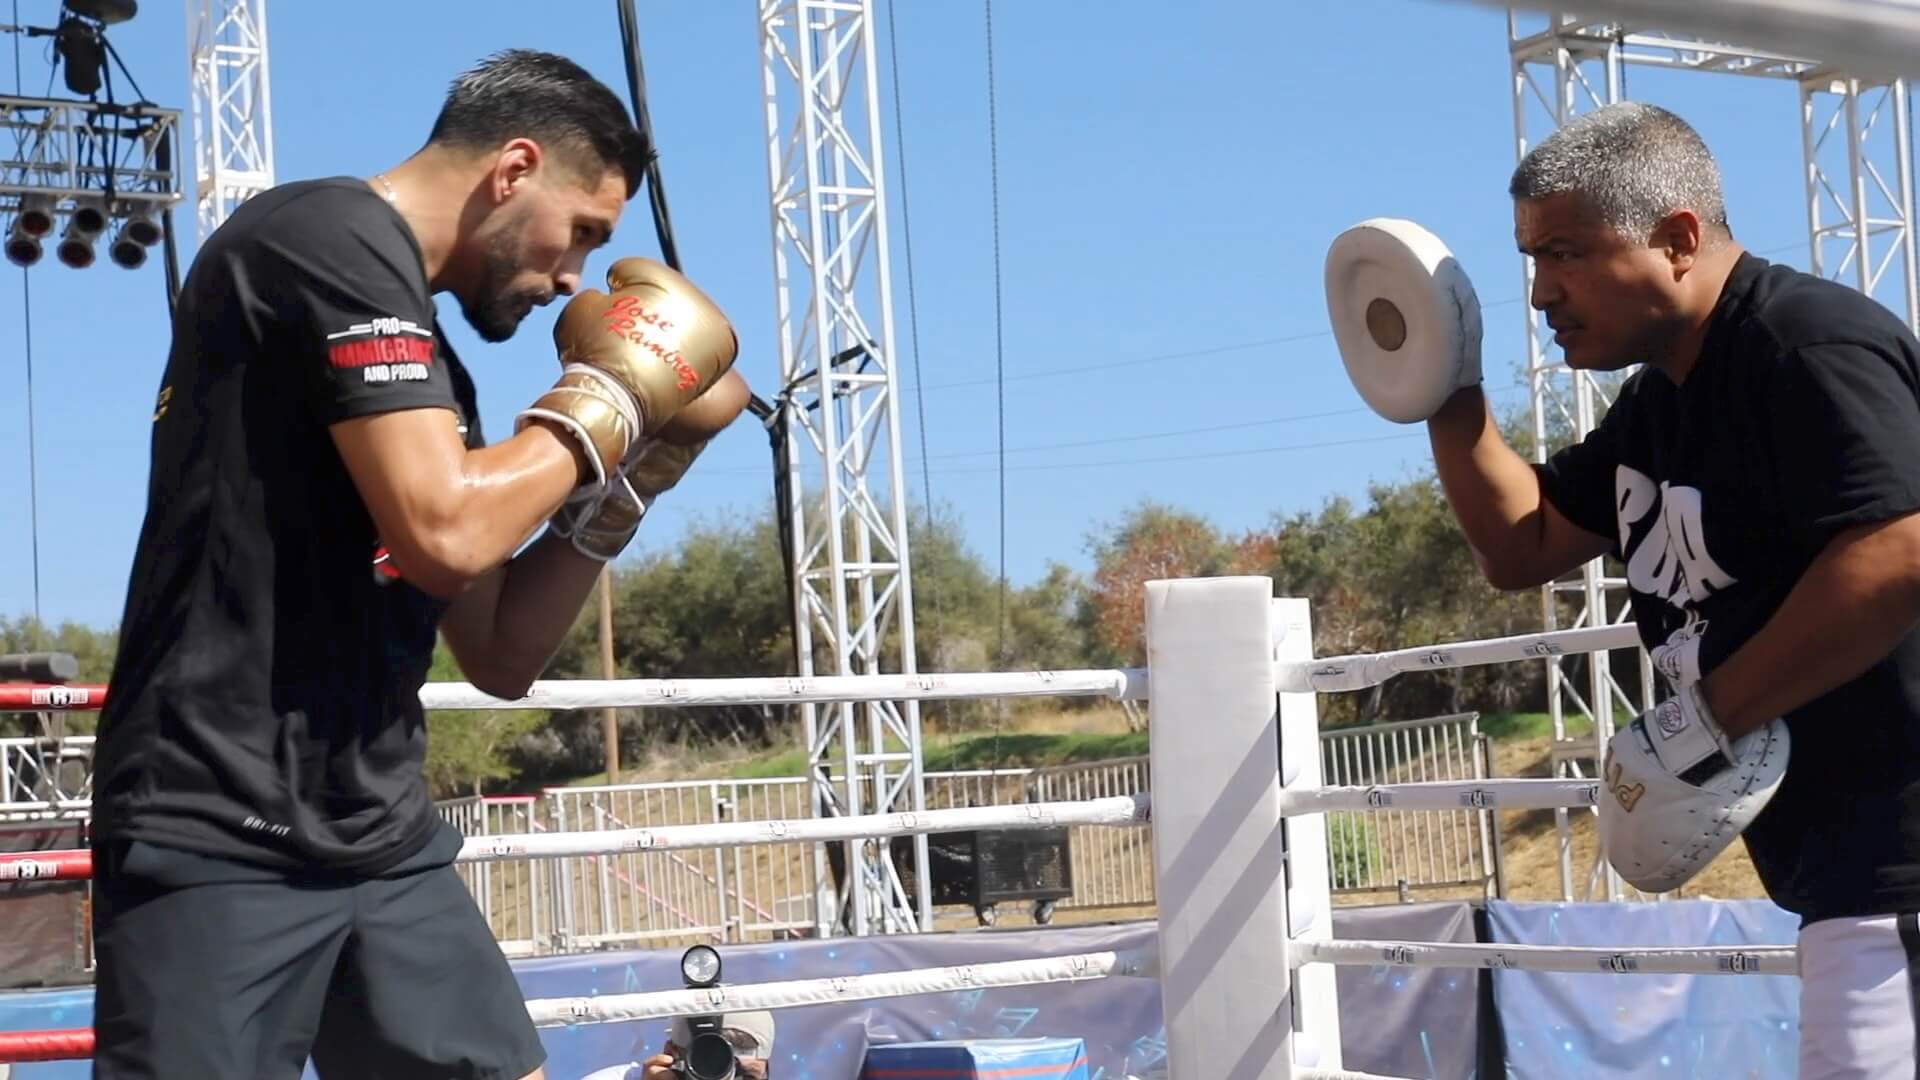 Jose Ramirez set to fight at Save Mart Center in February 2022 - ABC30  Fresno